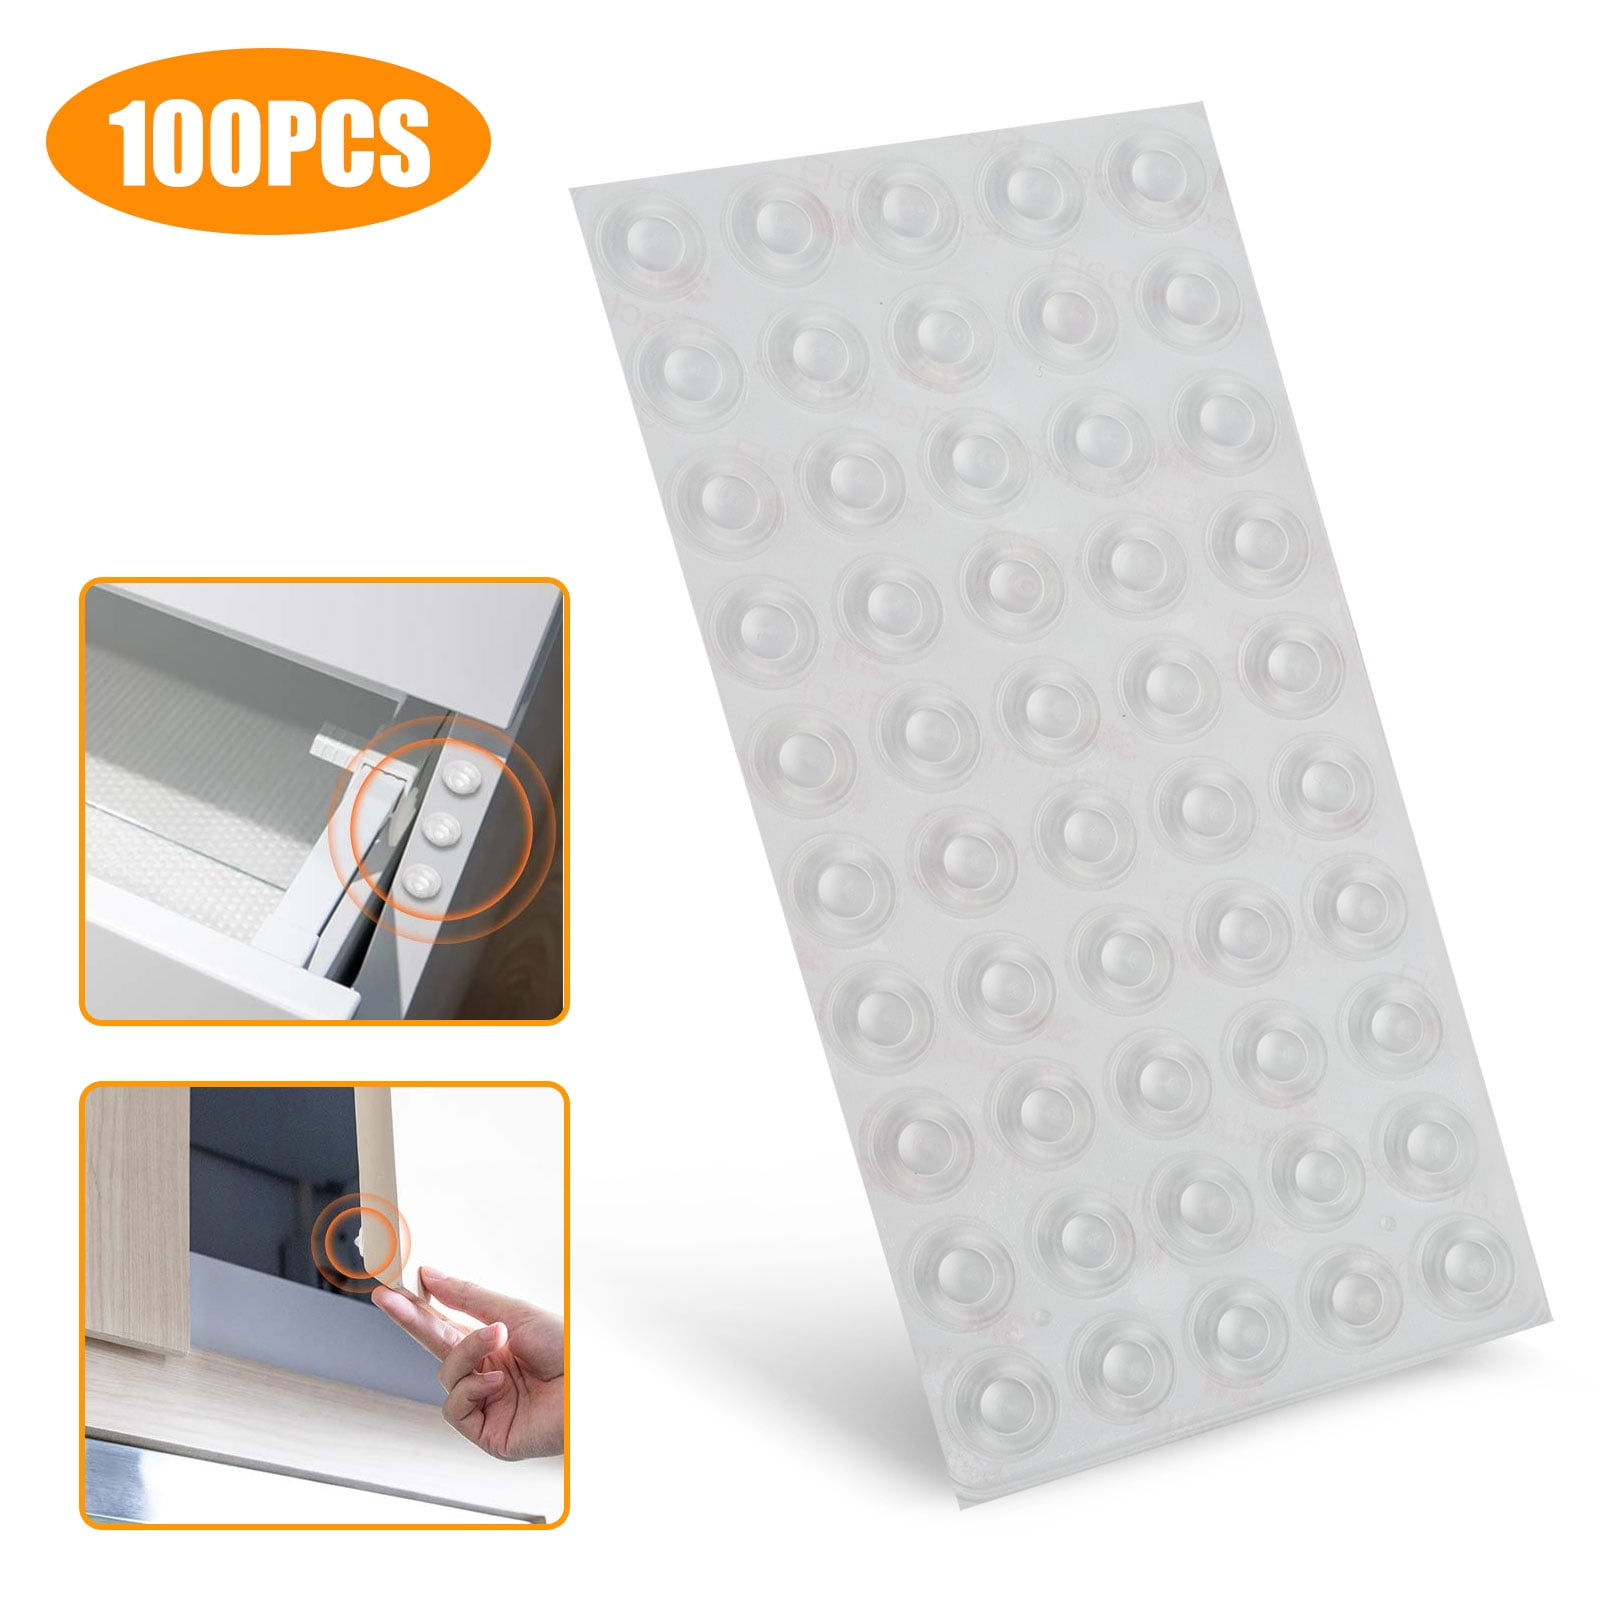 Adhesive Rubber Feet Buffer Bumper Stops Door Cupboard Drawer Kitchen Cabinet N3 